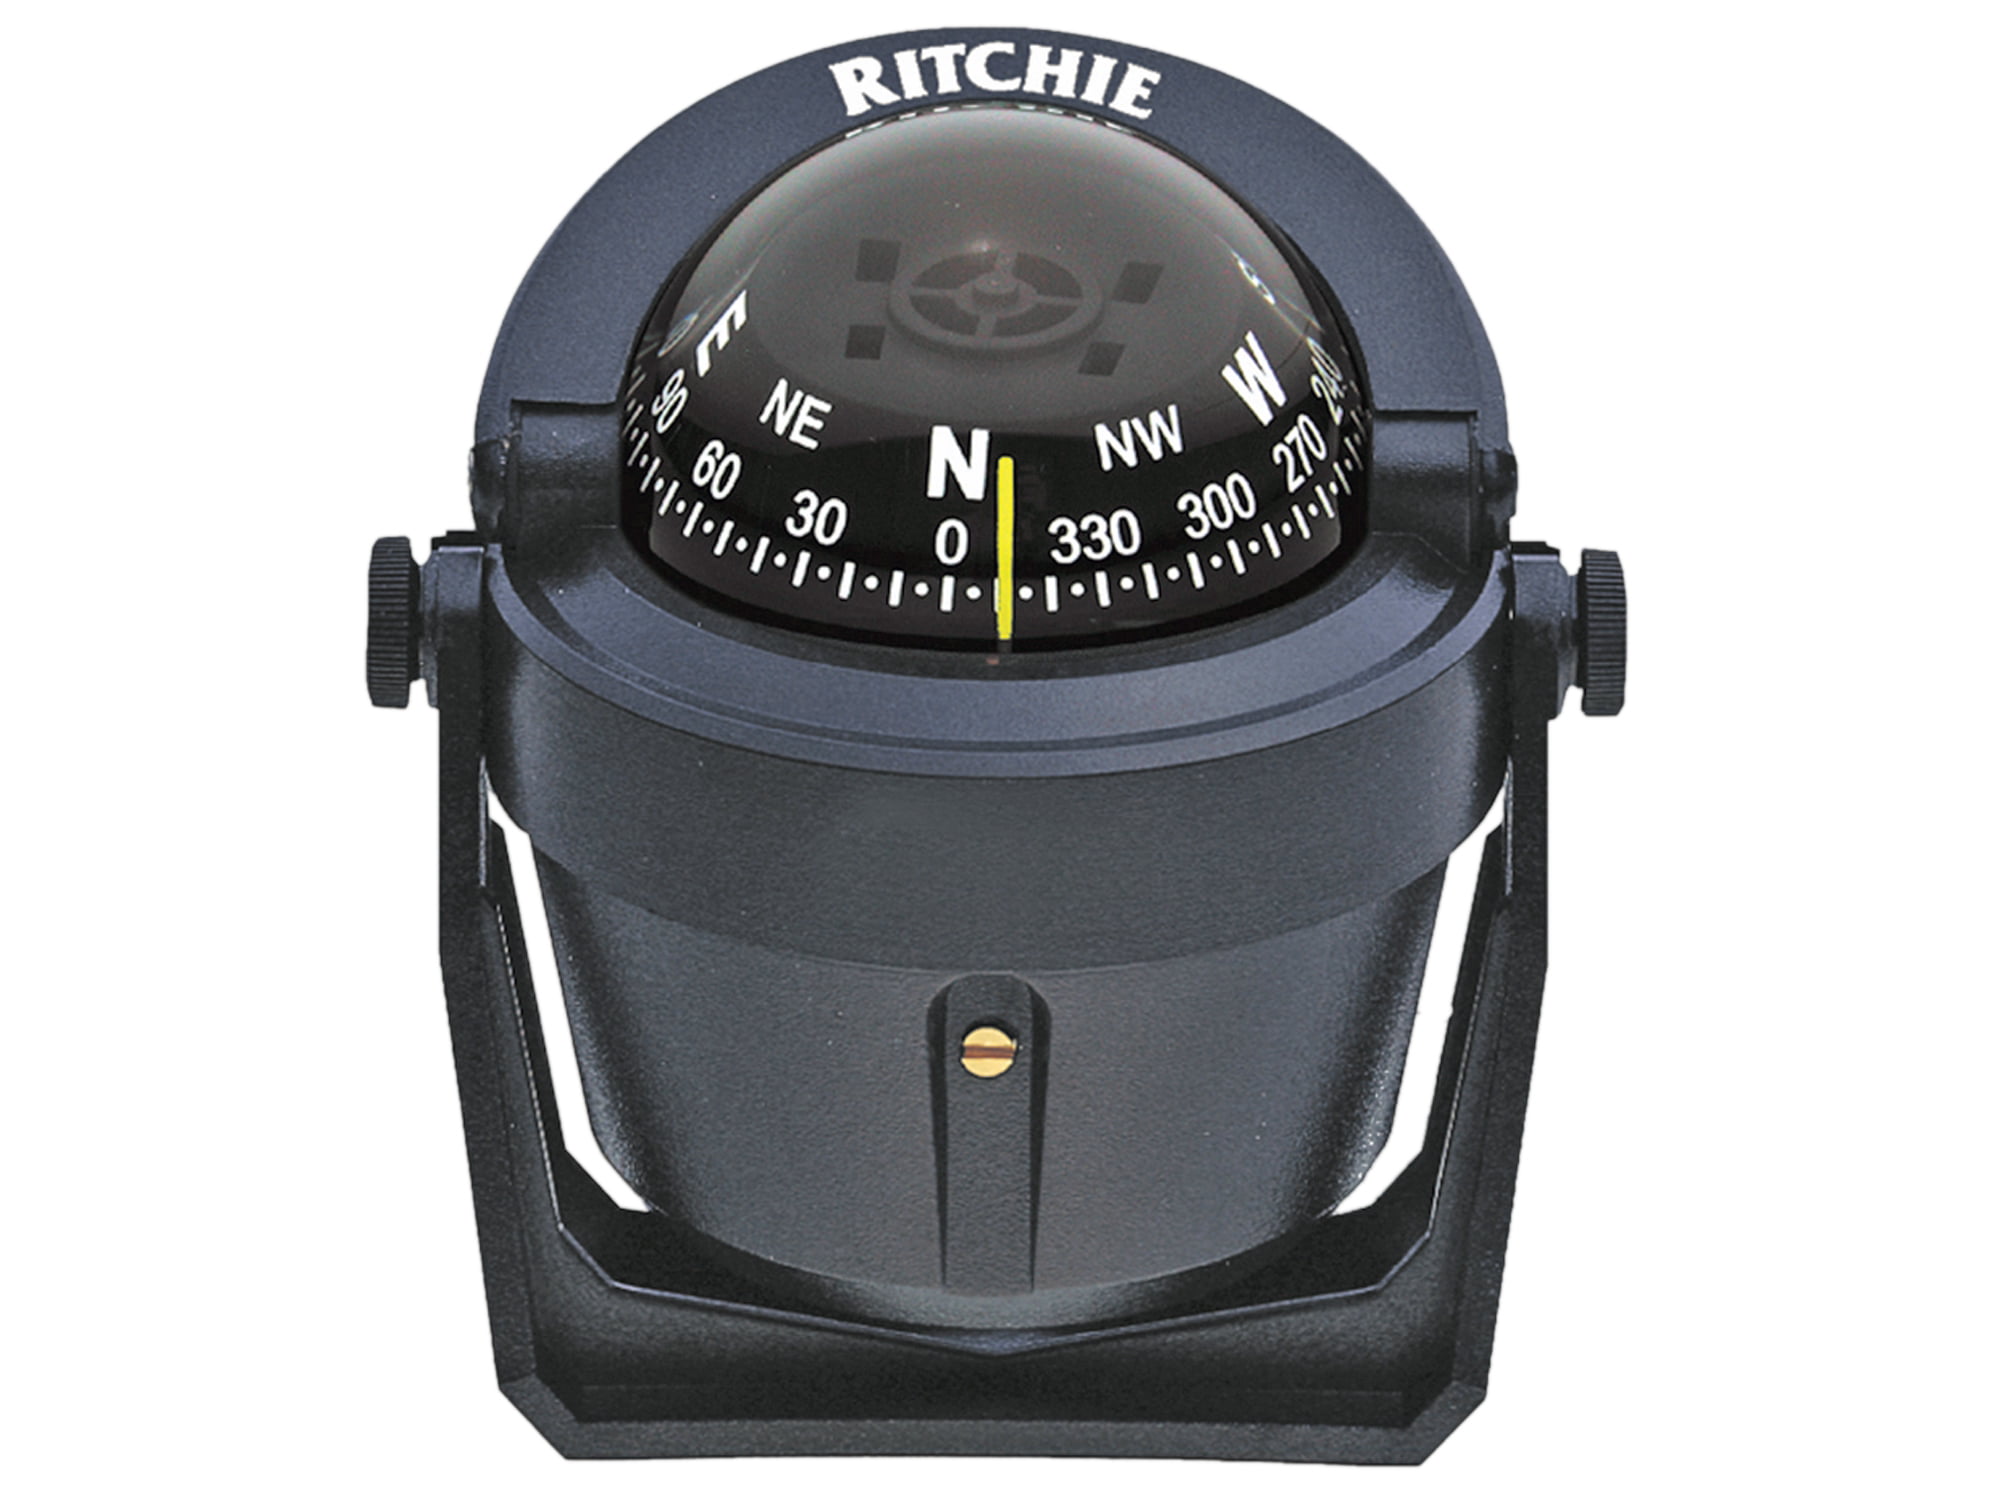 RITCHIE schwarz Kompass Kompass EXPLORER F-50 